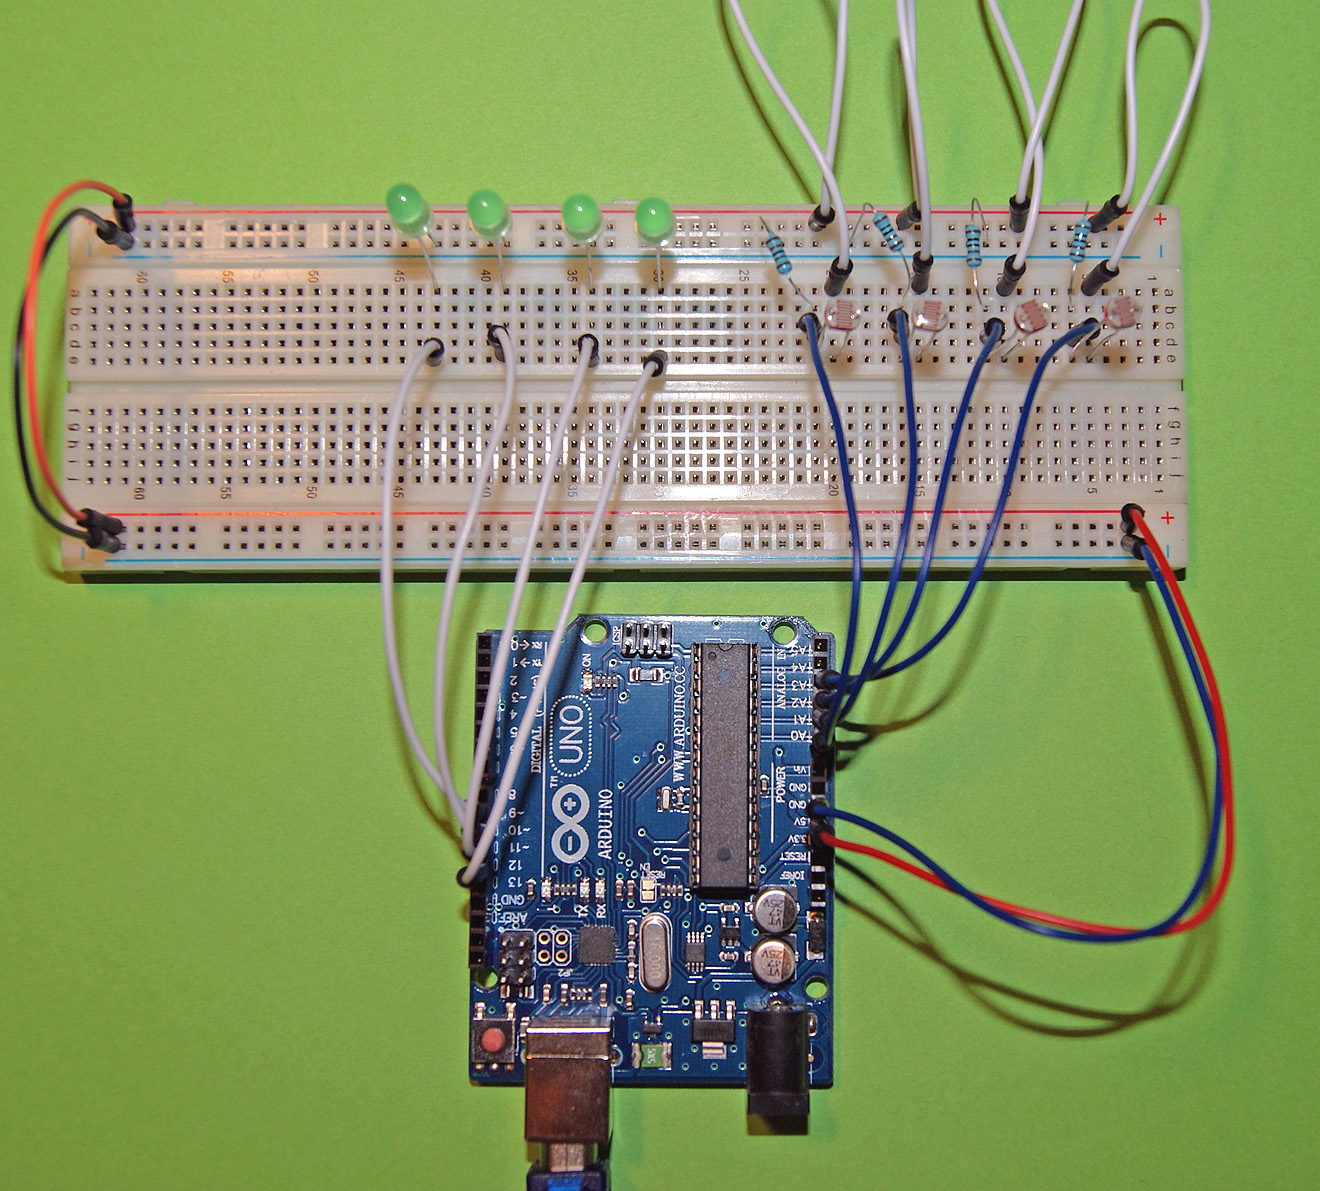 Arduino breadboard assembly - 4 photoresistors drive 4 LED's